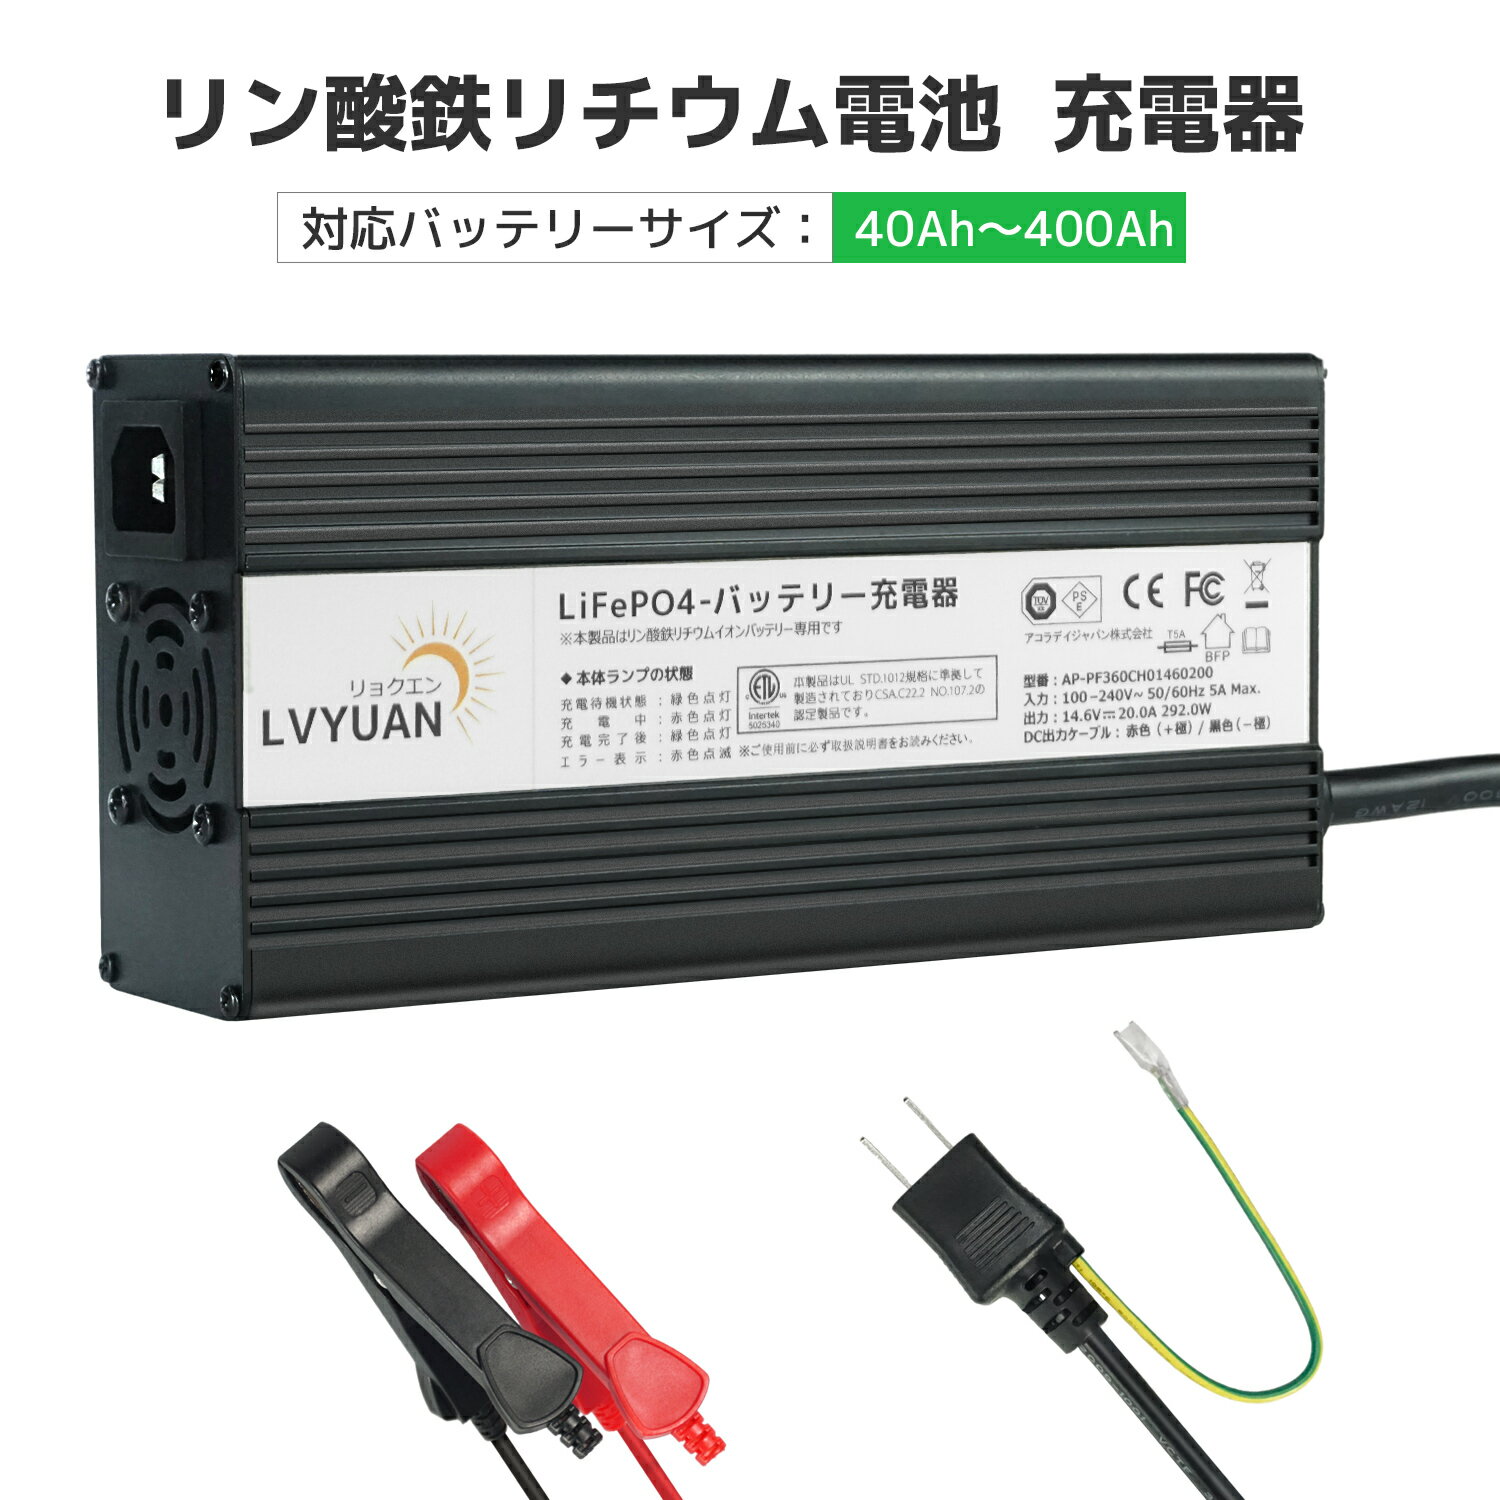 LVYUAN(リョクエン) 14.6V 20A リン酸鉄リチウムイオンバッテリー充電器 LiFePO4専用 バッテリー充電器 全自動 使いやすい 軽量 スマートチャージャー 12V対応 リン酸鉄リチウム電池 スマート保護機能付き 